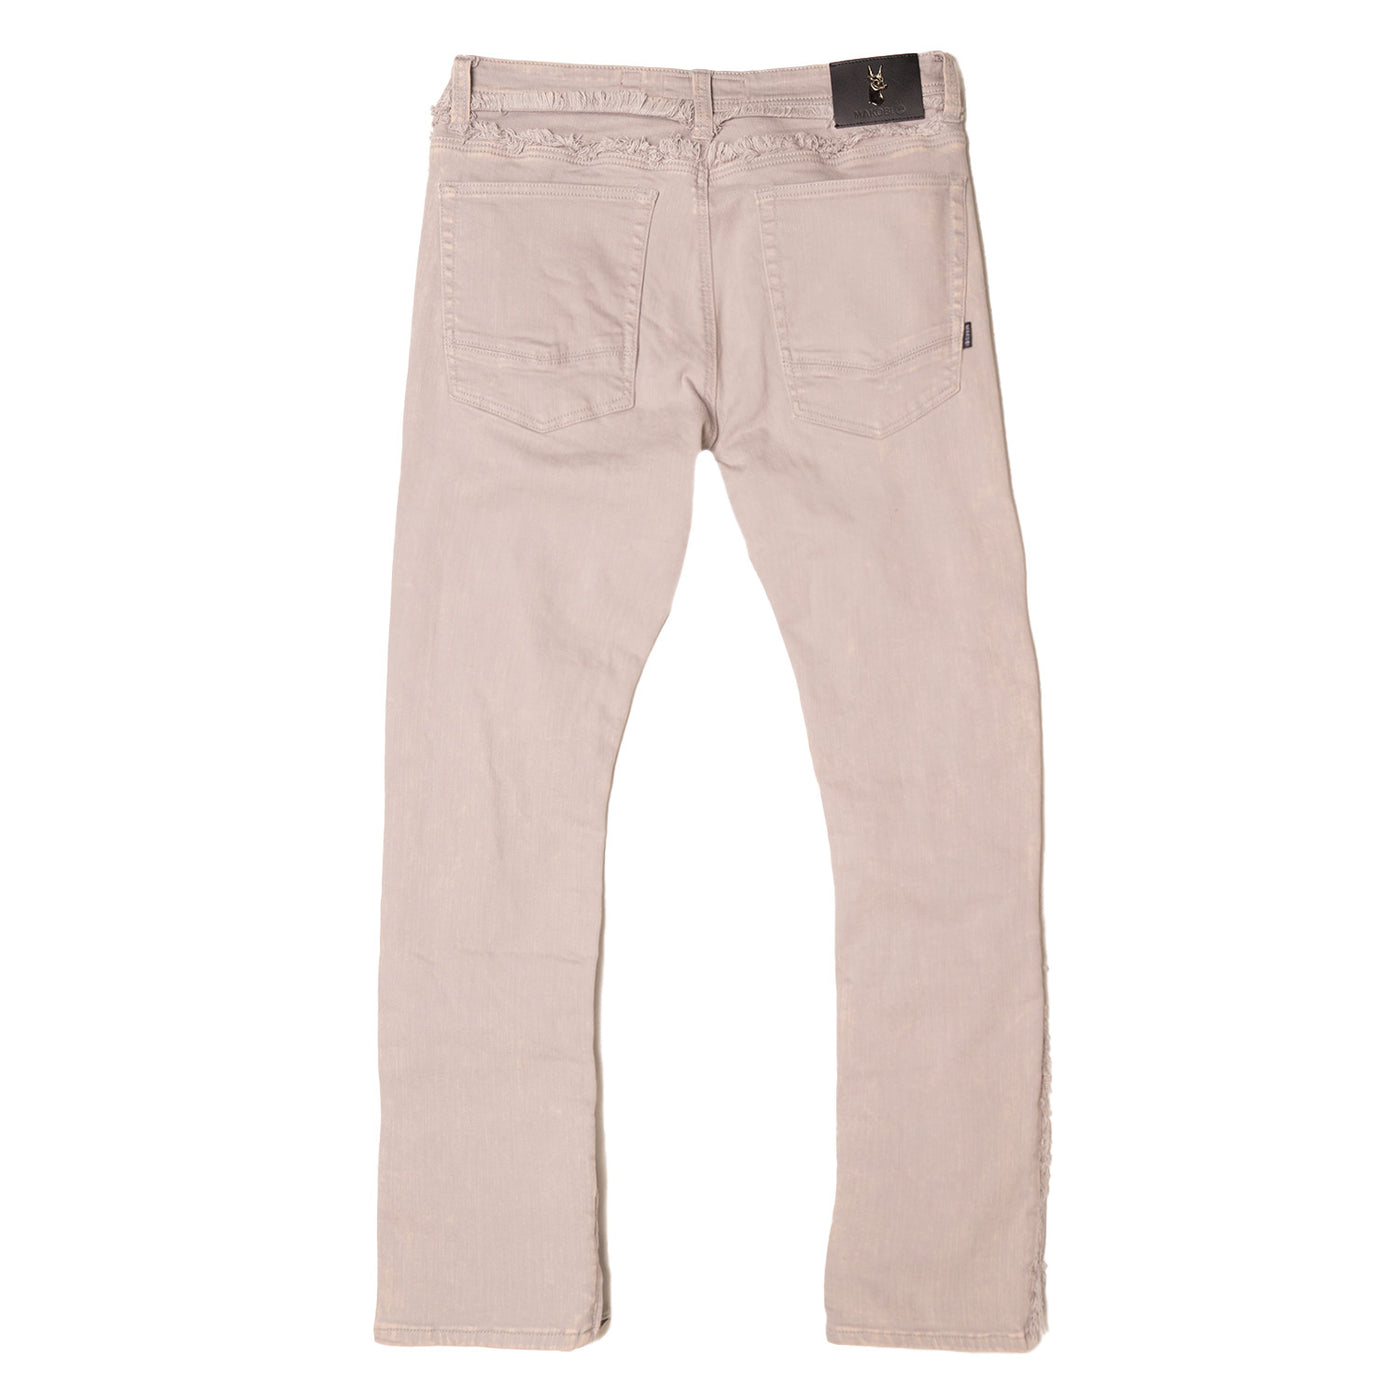 M1973 Danielli 34" Semi Stacked Jeans - Gray